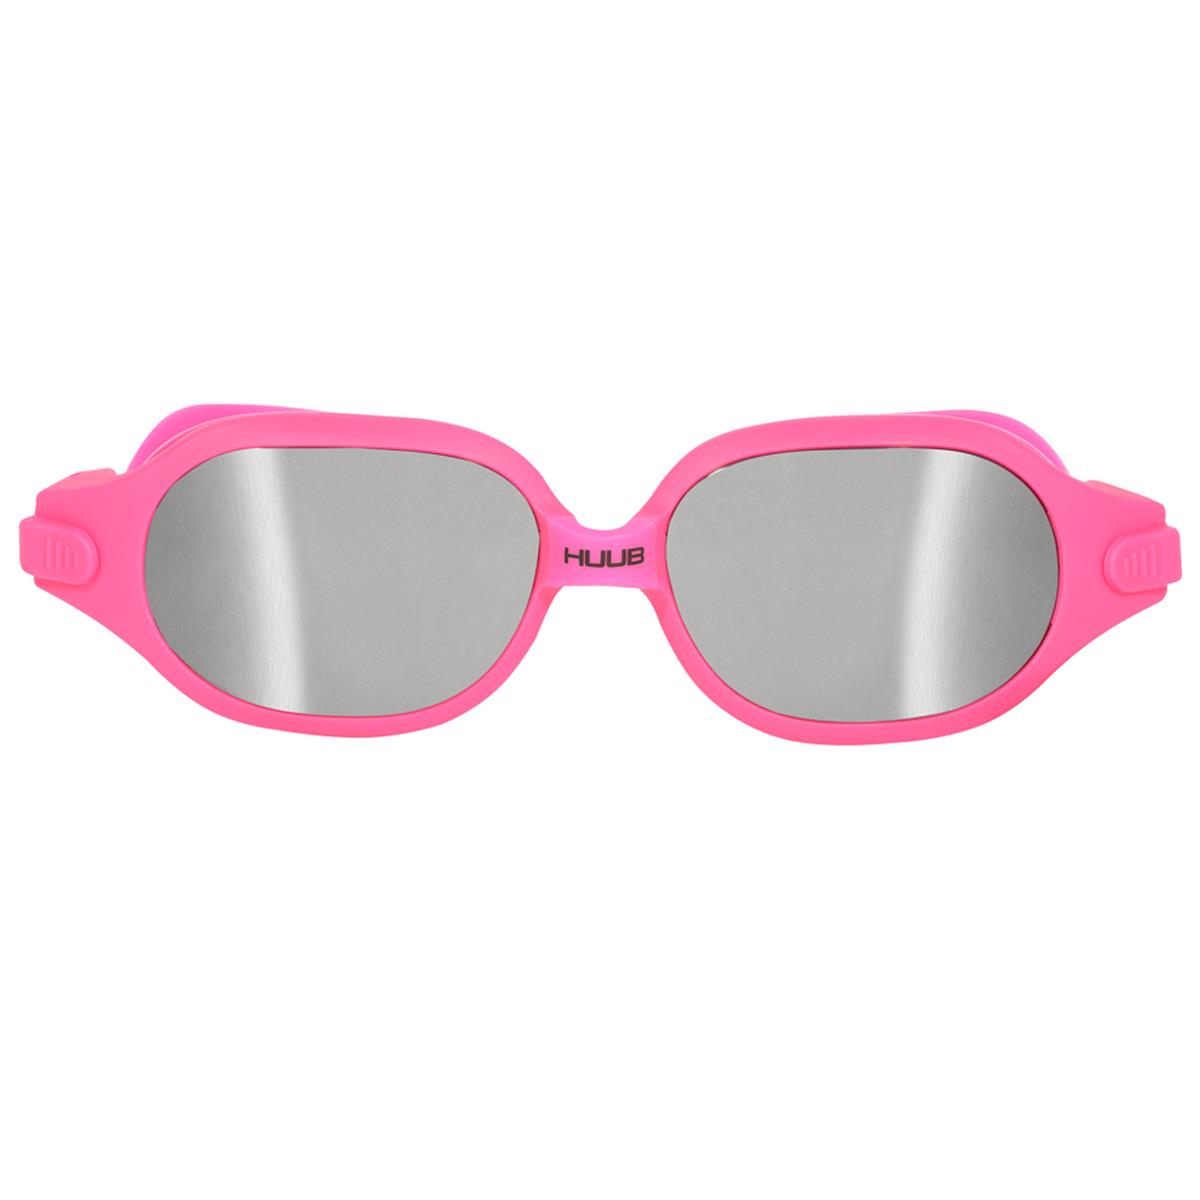 HUUB Retro Goggles - Pink